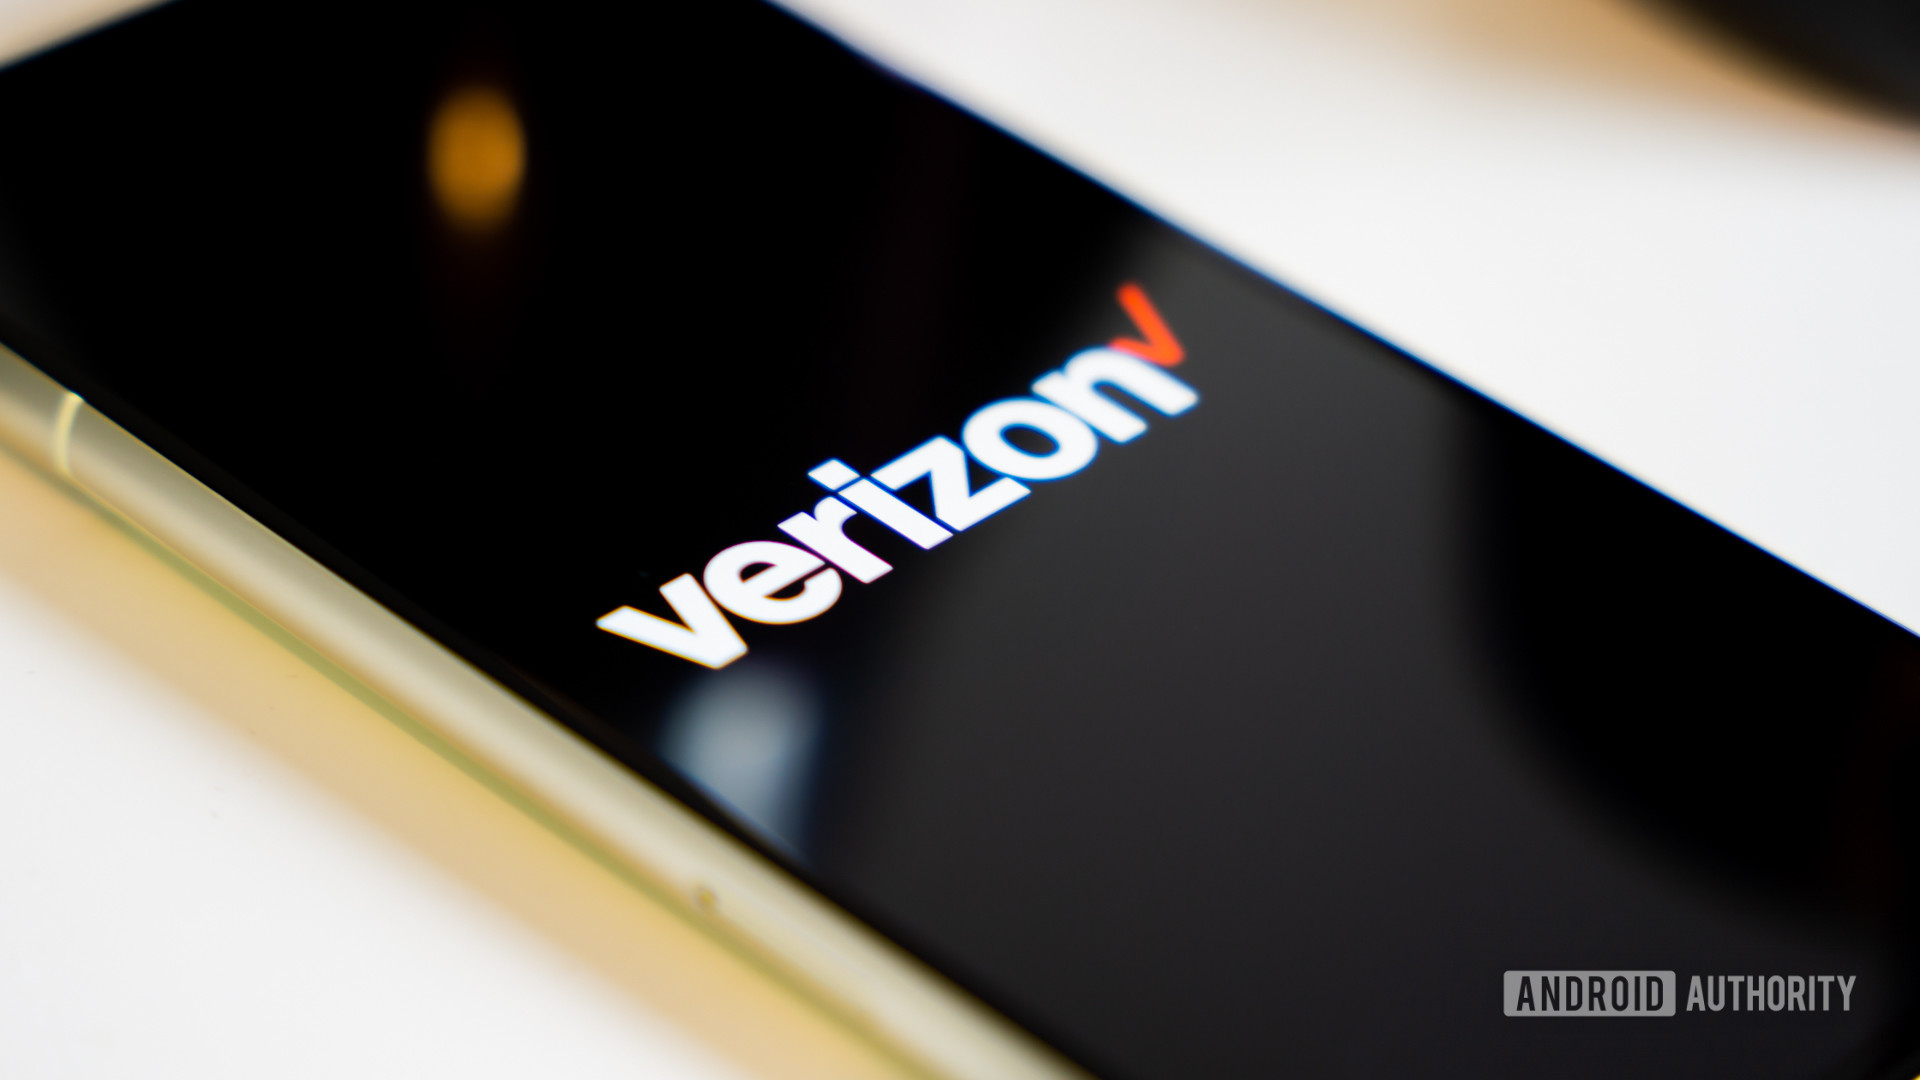 Verizon logo on smartphone laying on desk Stock photo 2